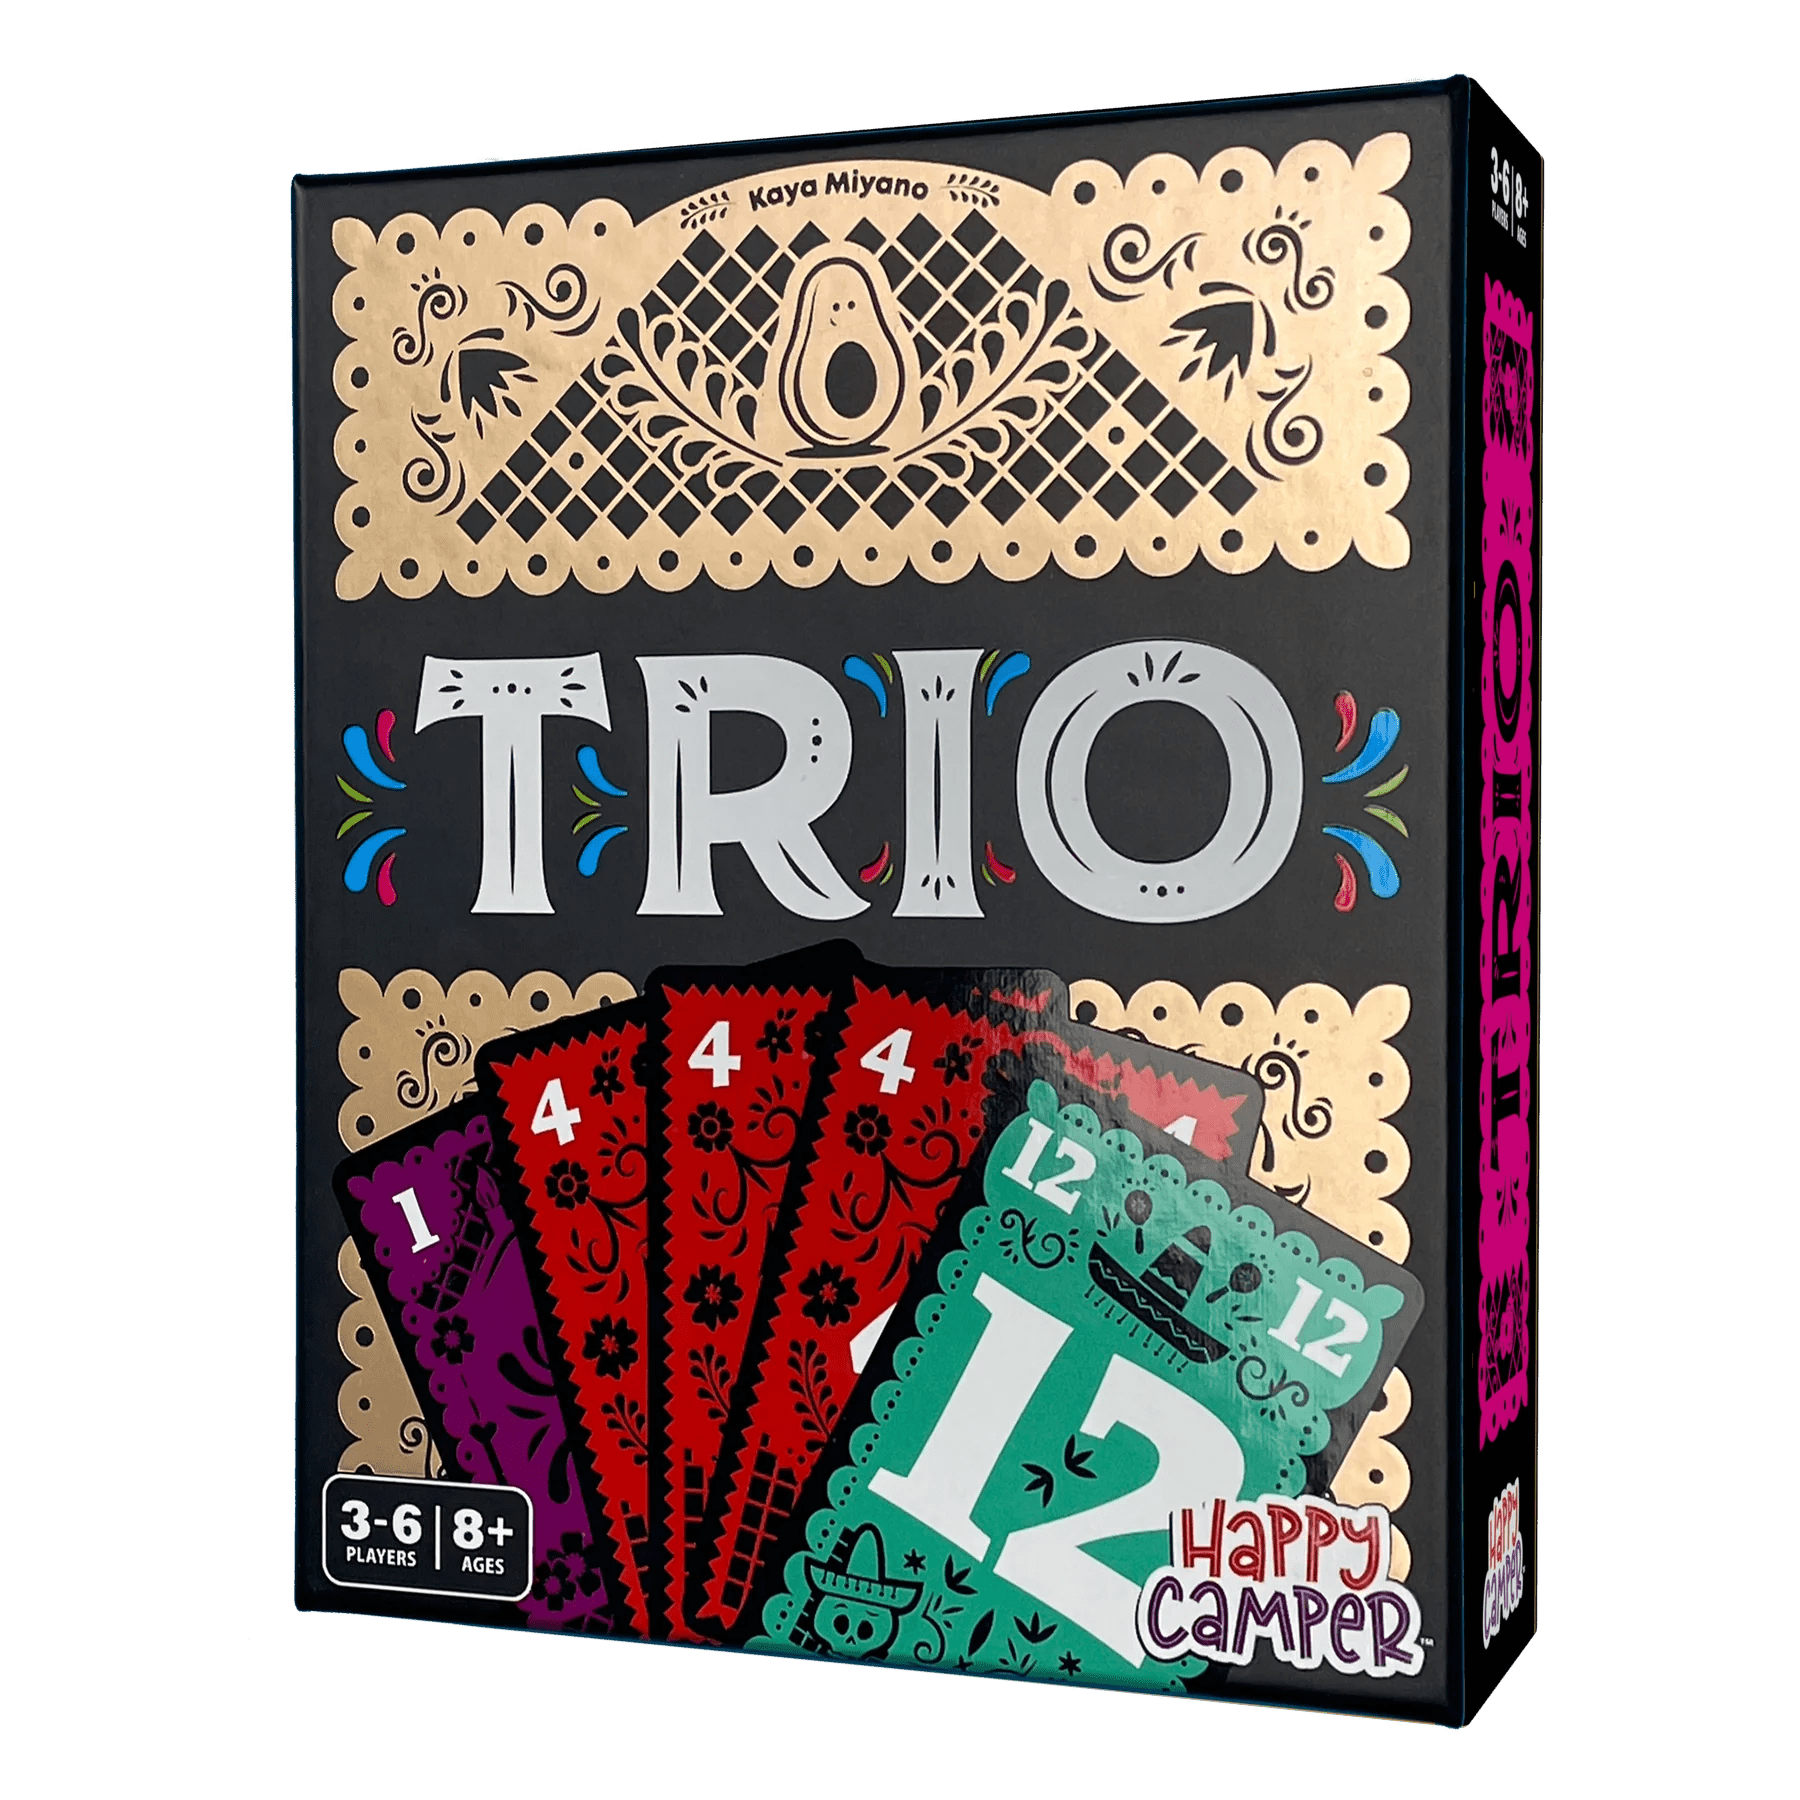 Trio PH - Gaming Library